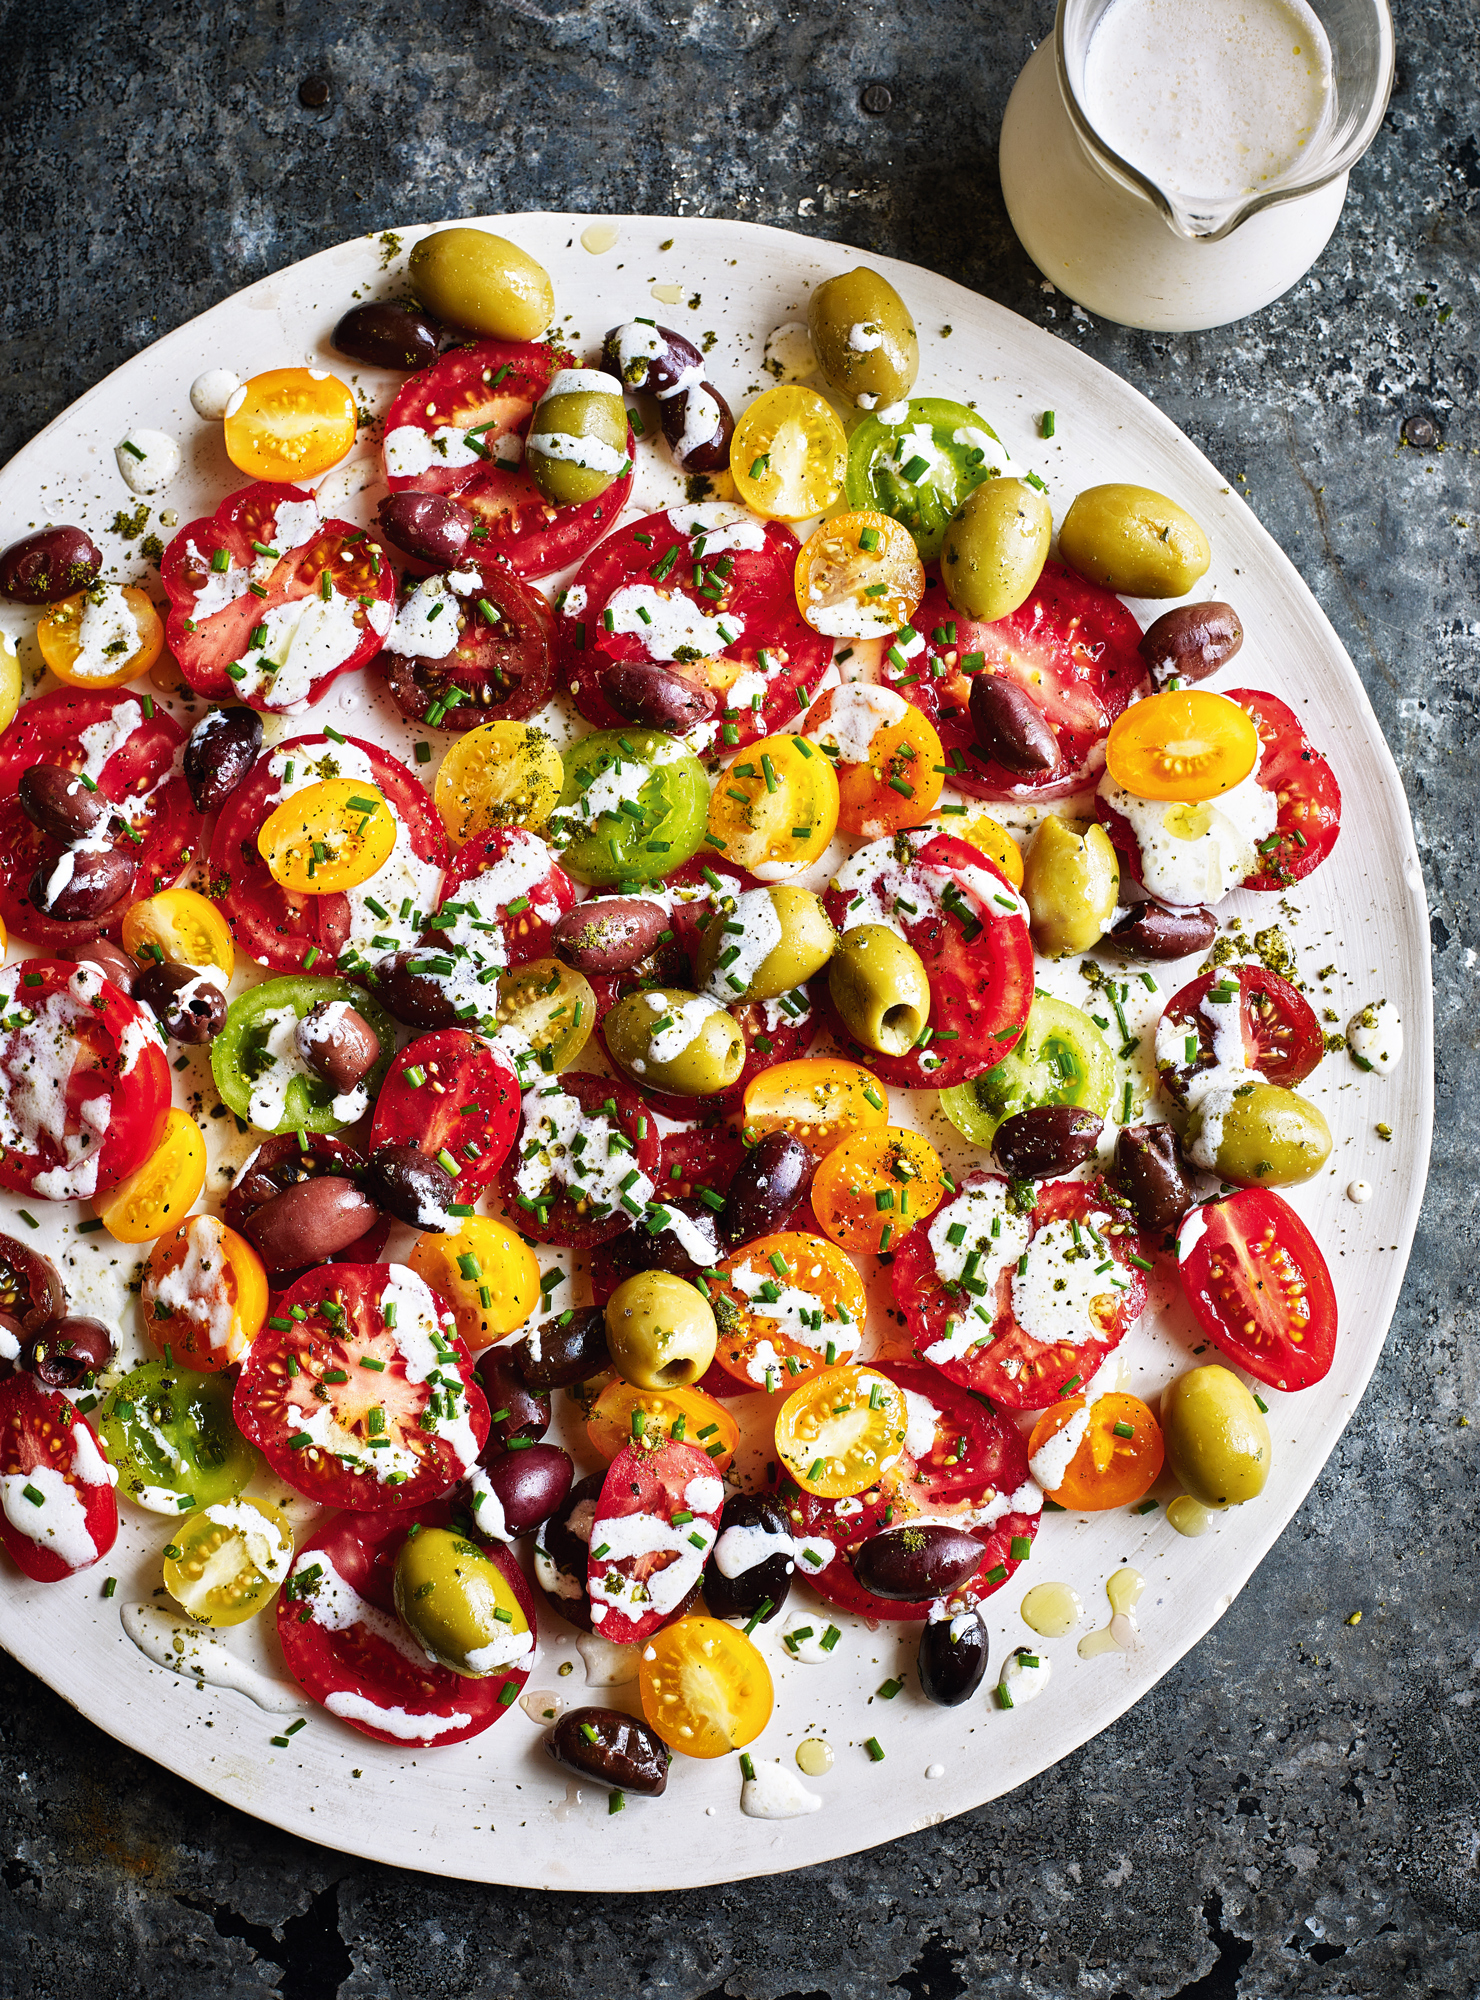 Sabrina Ghayour's tomato and olive salad